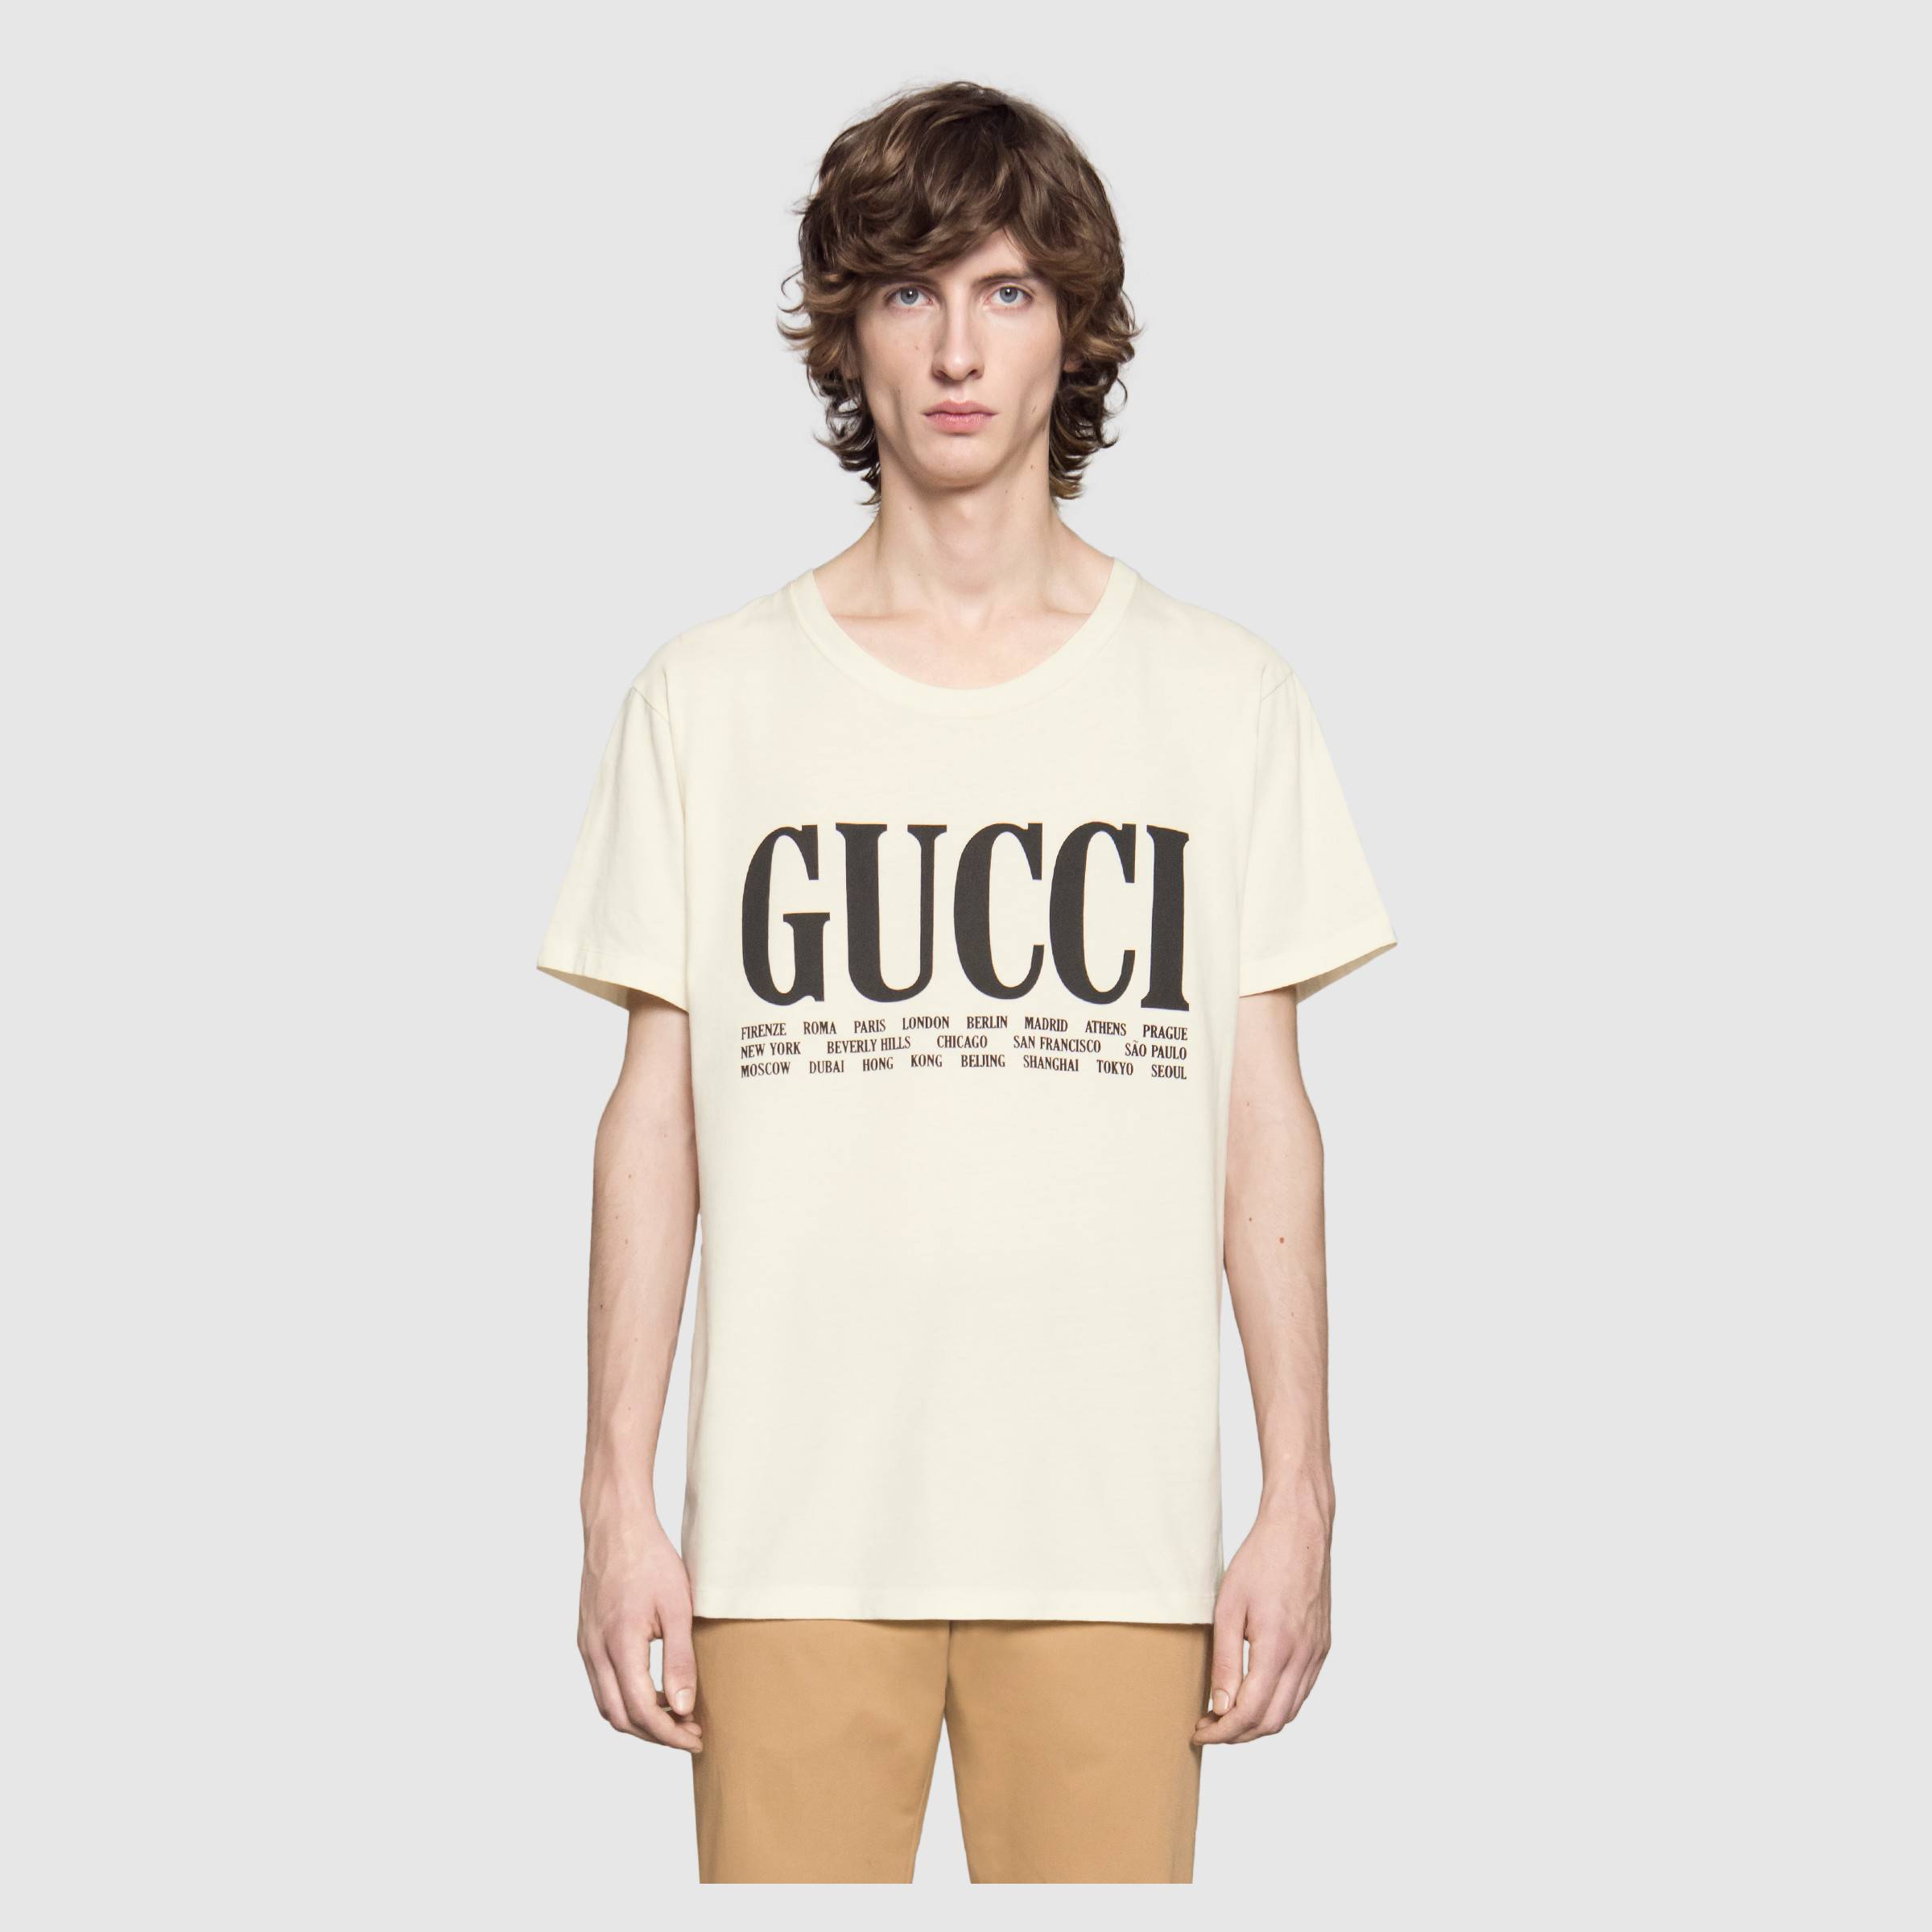 gucci shirt 2018